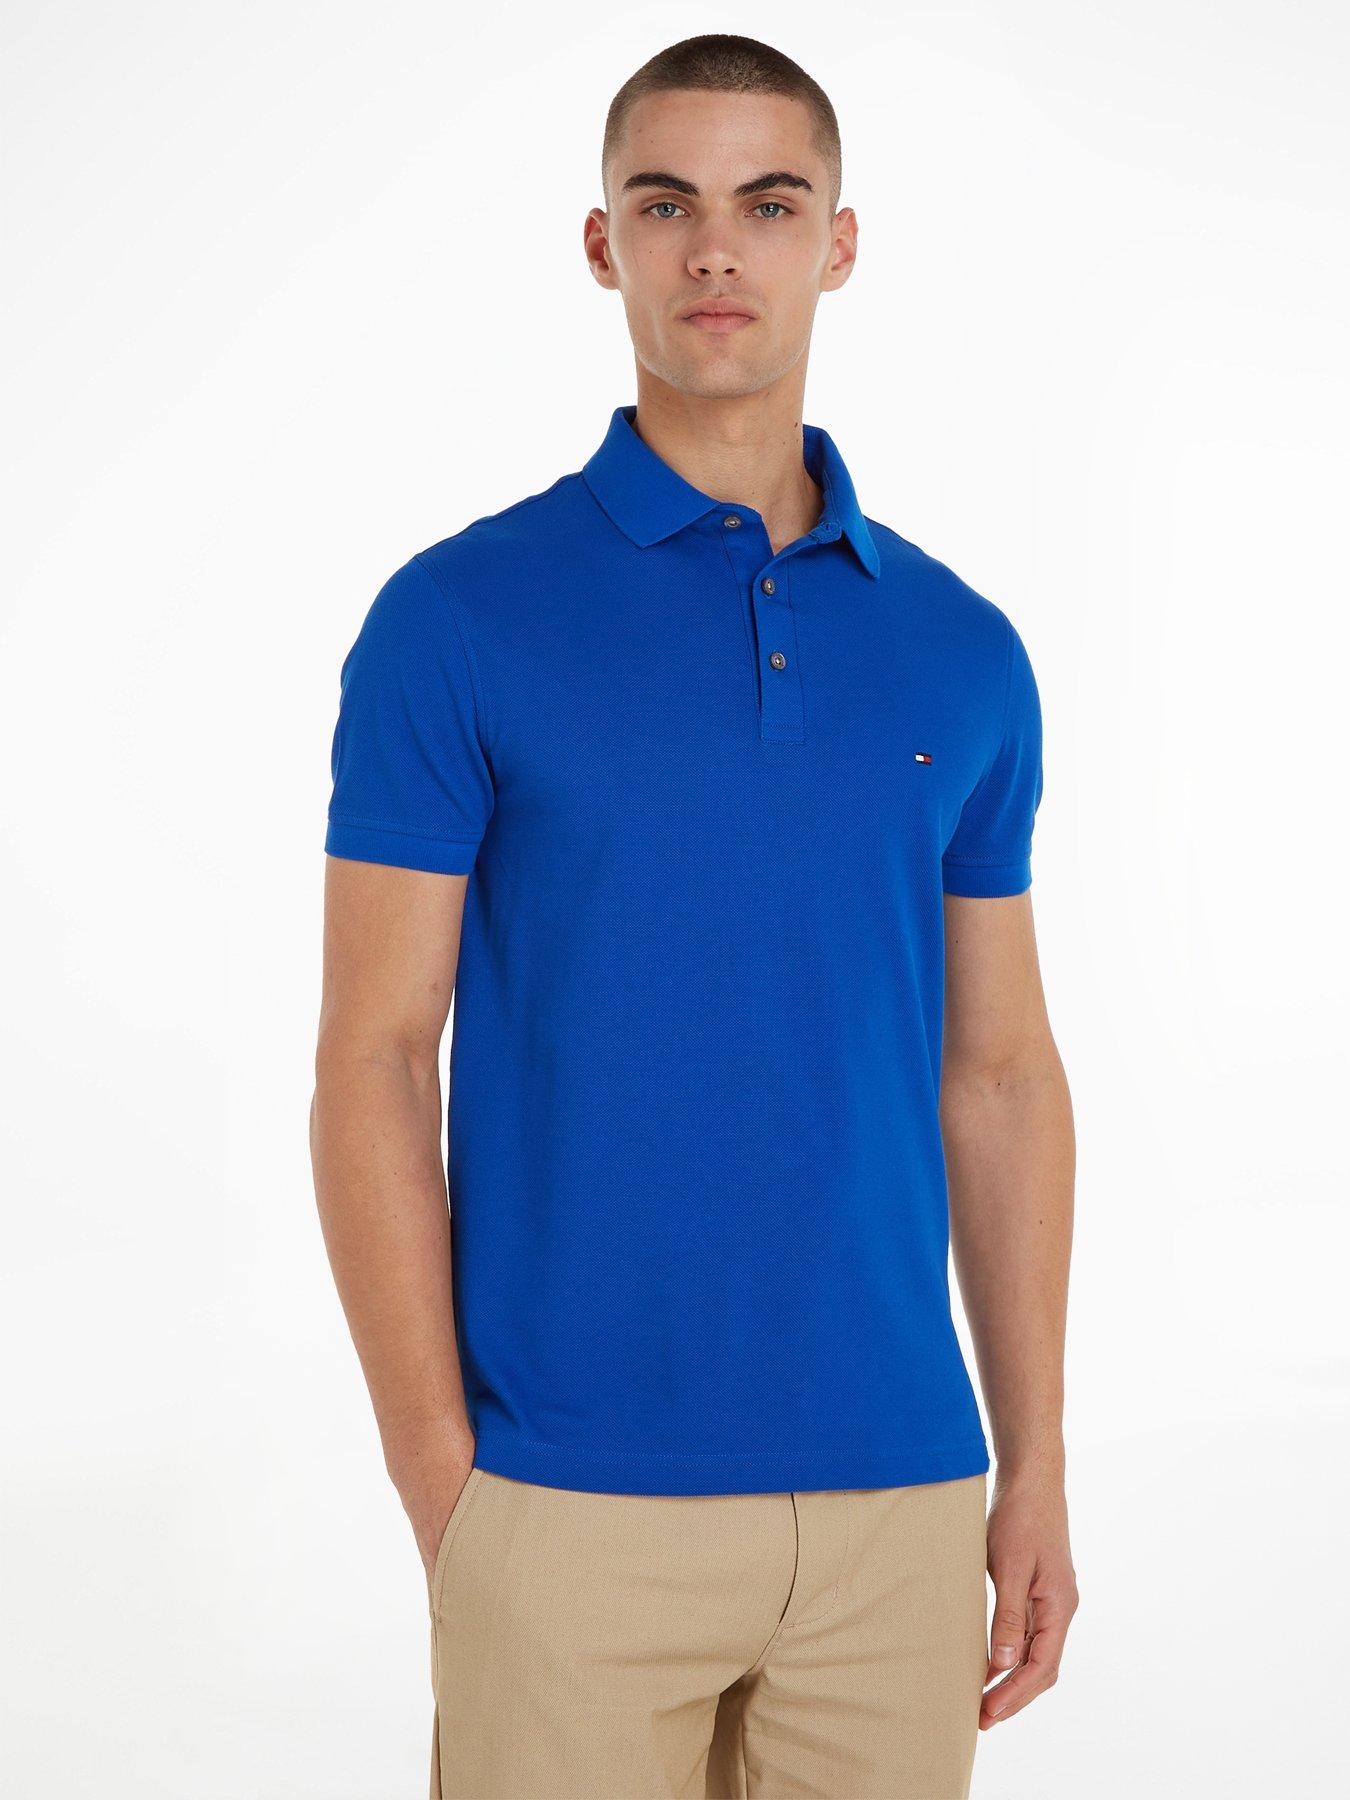 Tommy Hilfiger 1985 flag logo slim fit polo shirt in blue